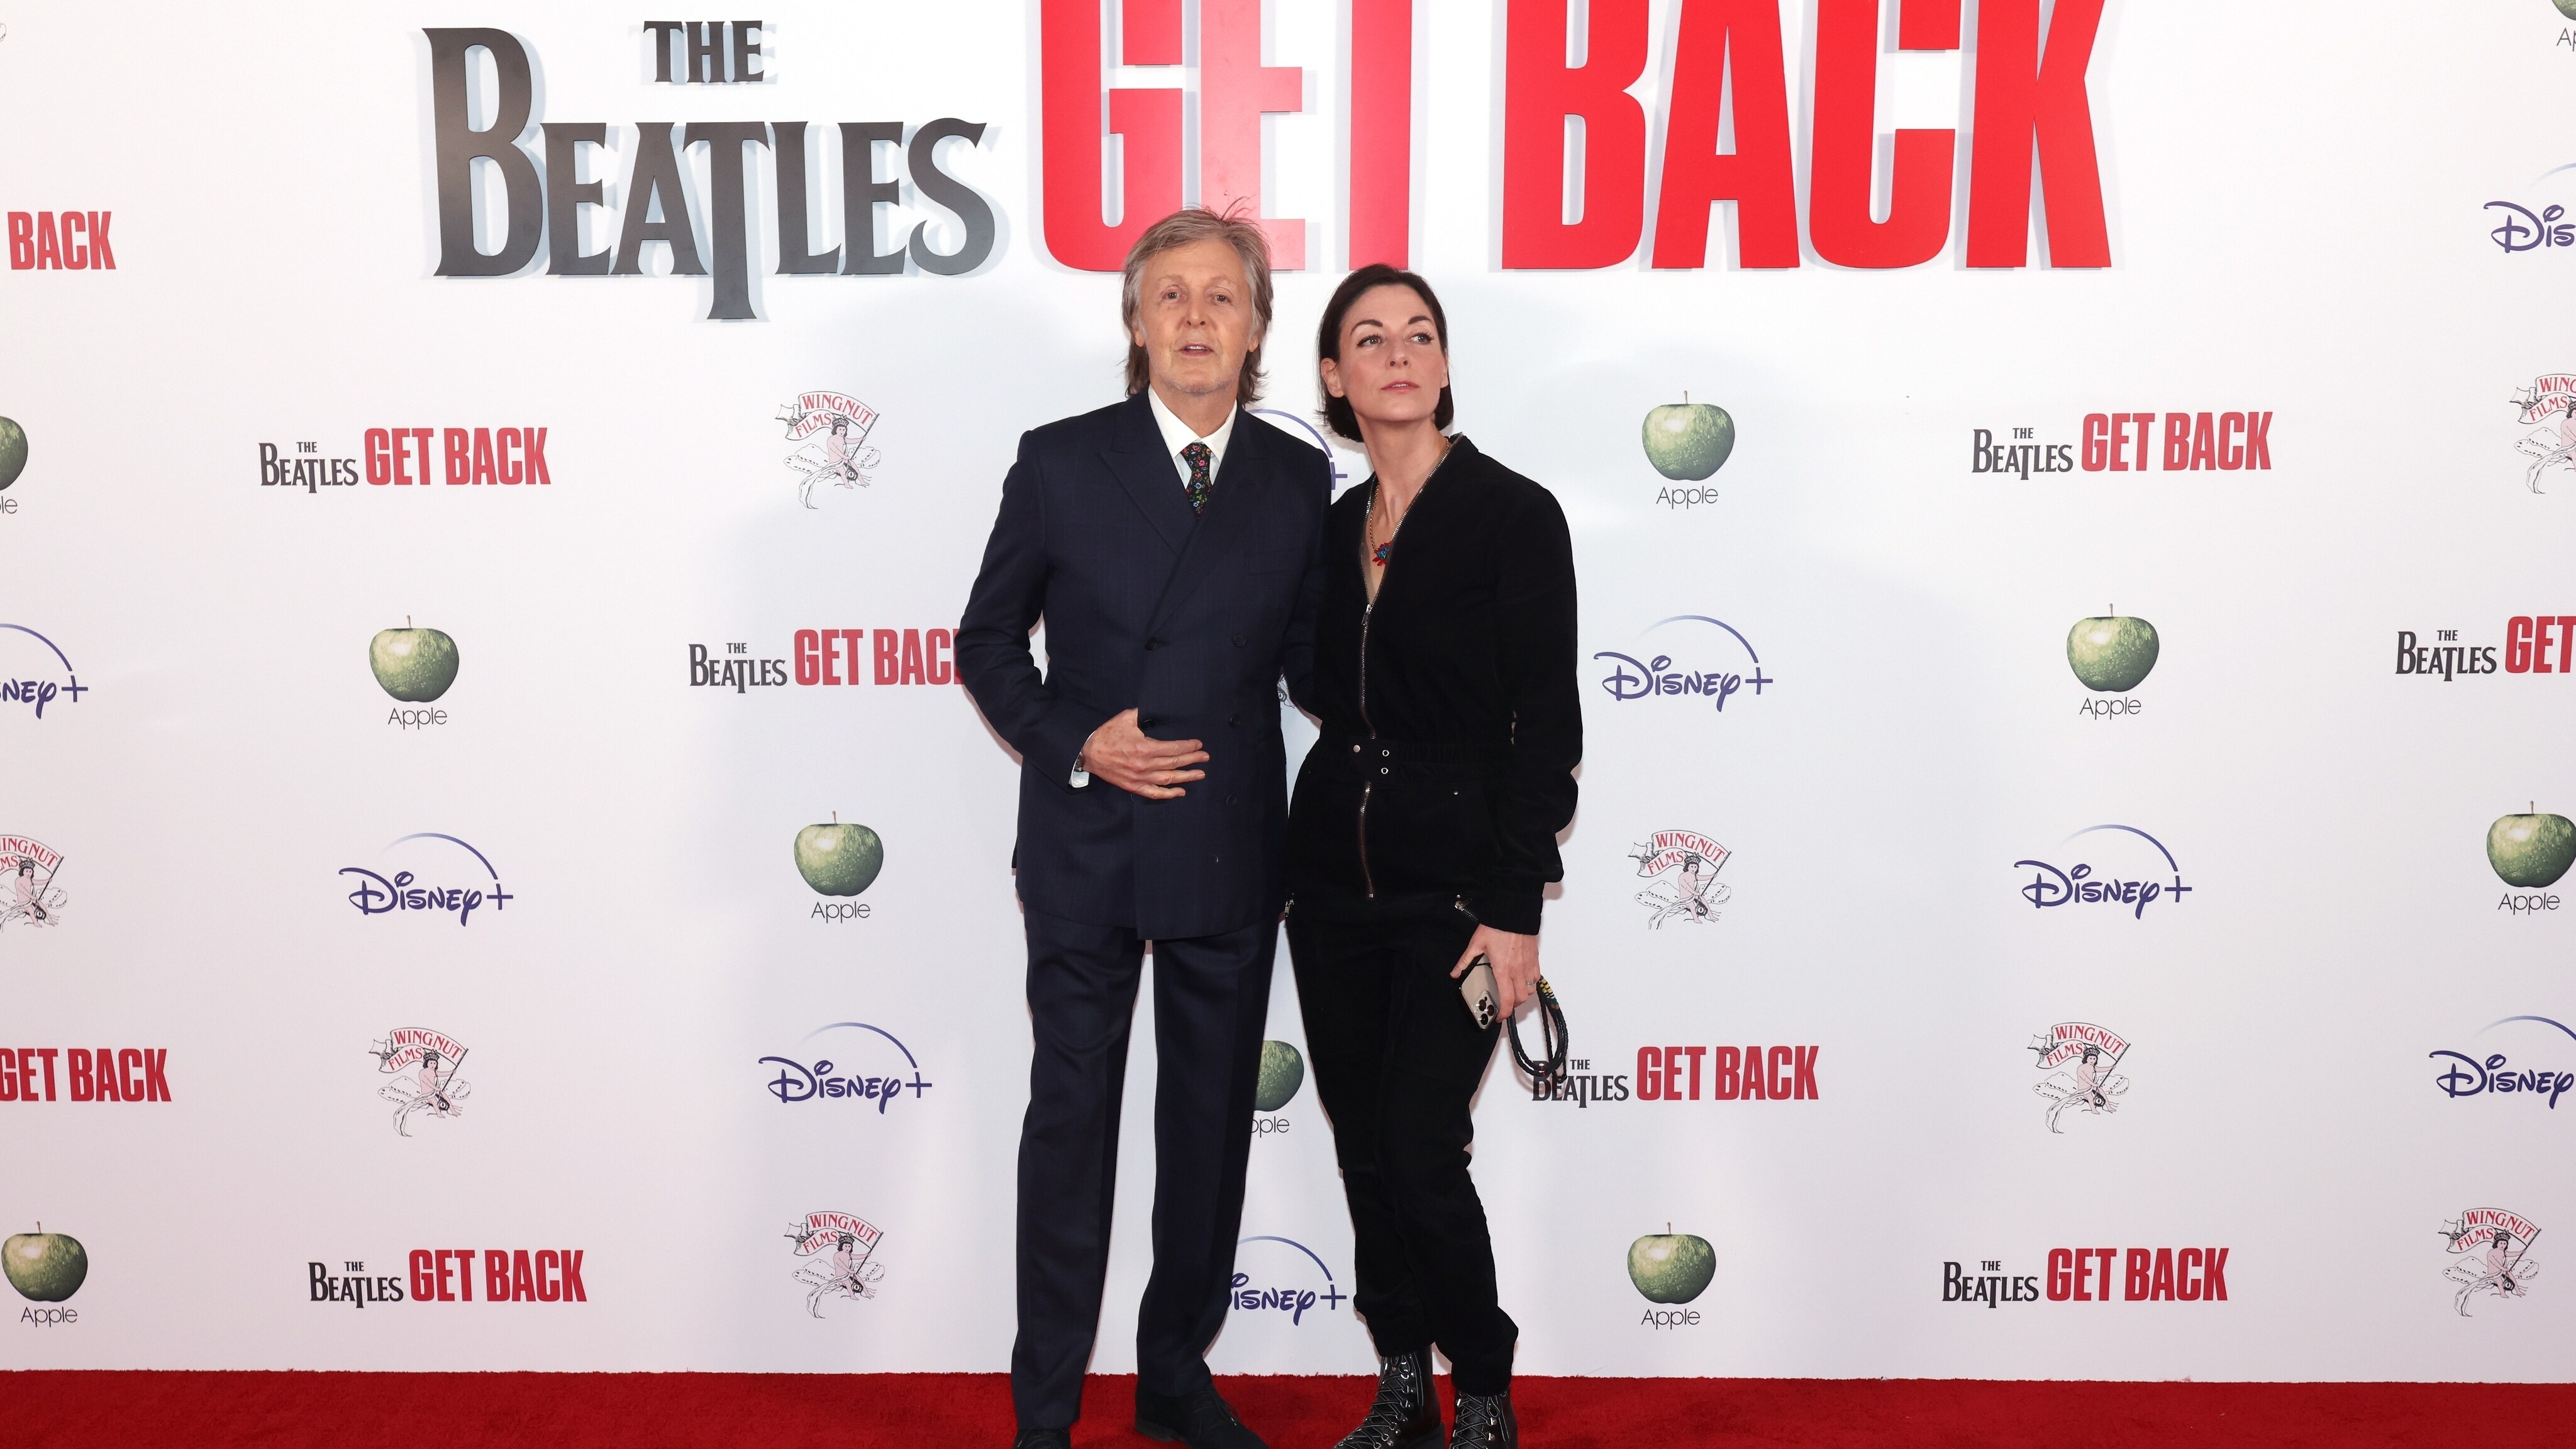 Disney+ Screens Exclusive 100-Minute Preview Of Peter Jackson’s Original Docuseries “The Beatles: Get Back” In London